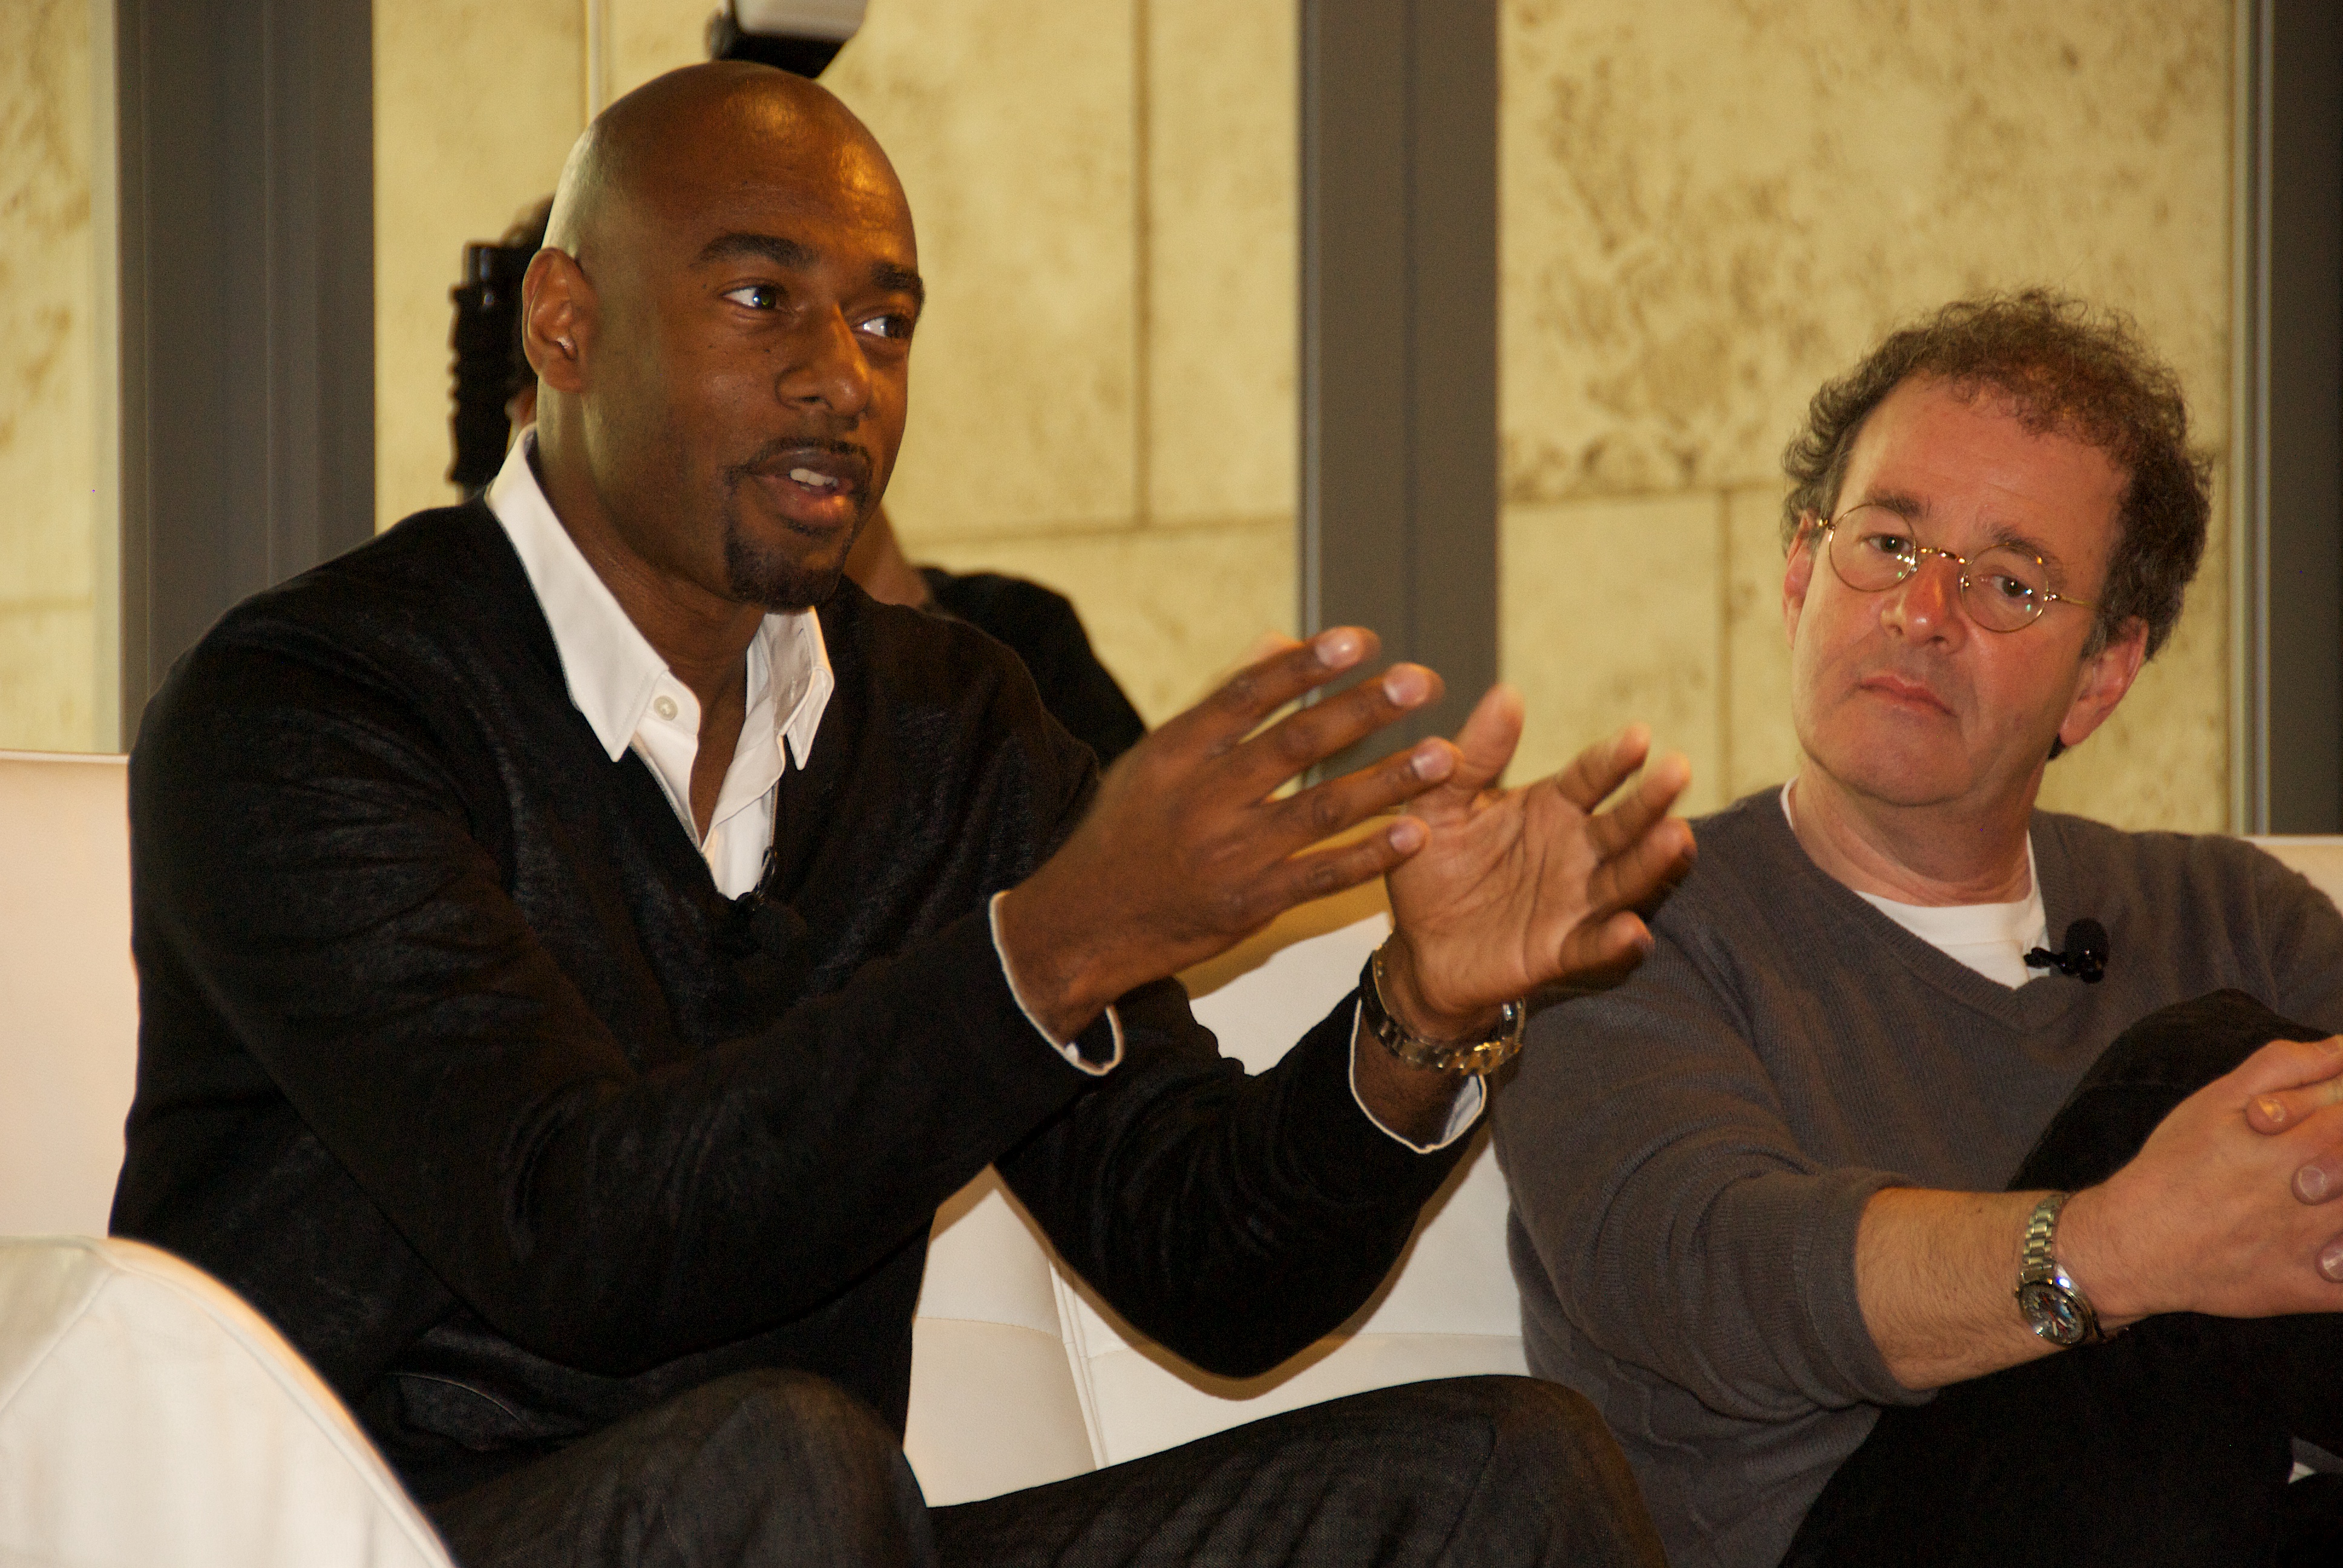 Michael Elliot speaking on a screenwriting panel at the Dallas International Film Festival 2012.